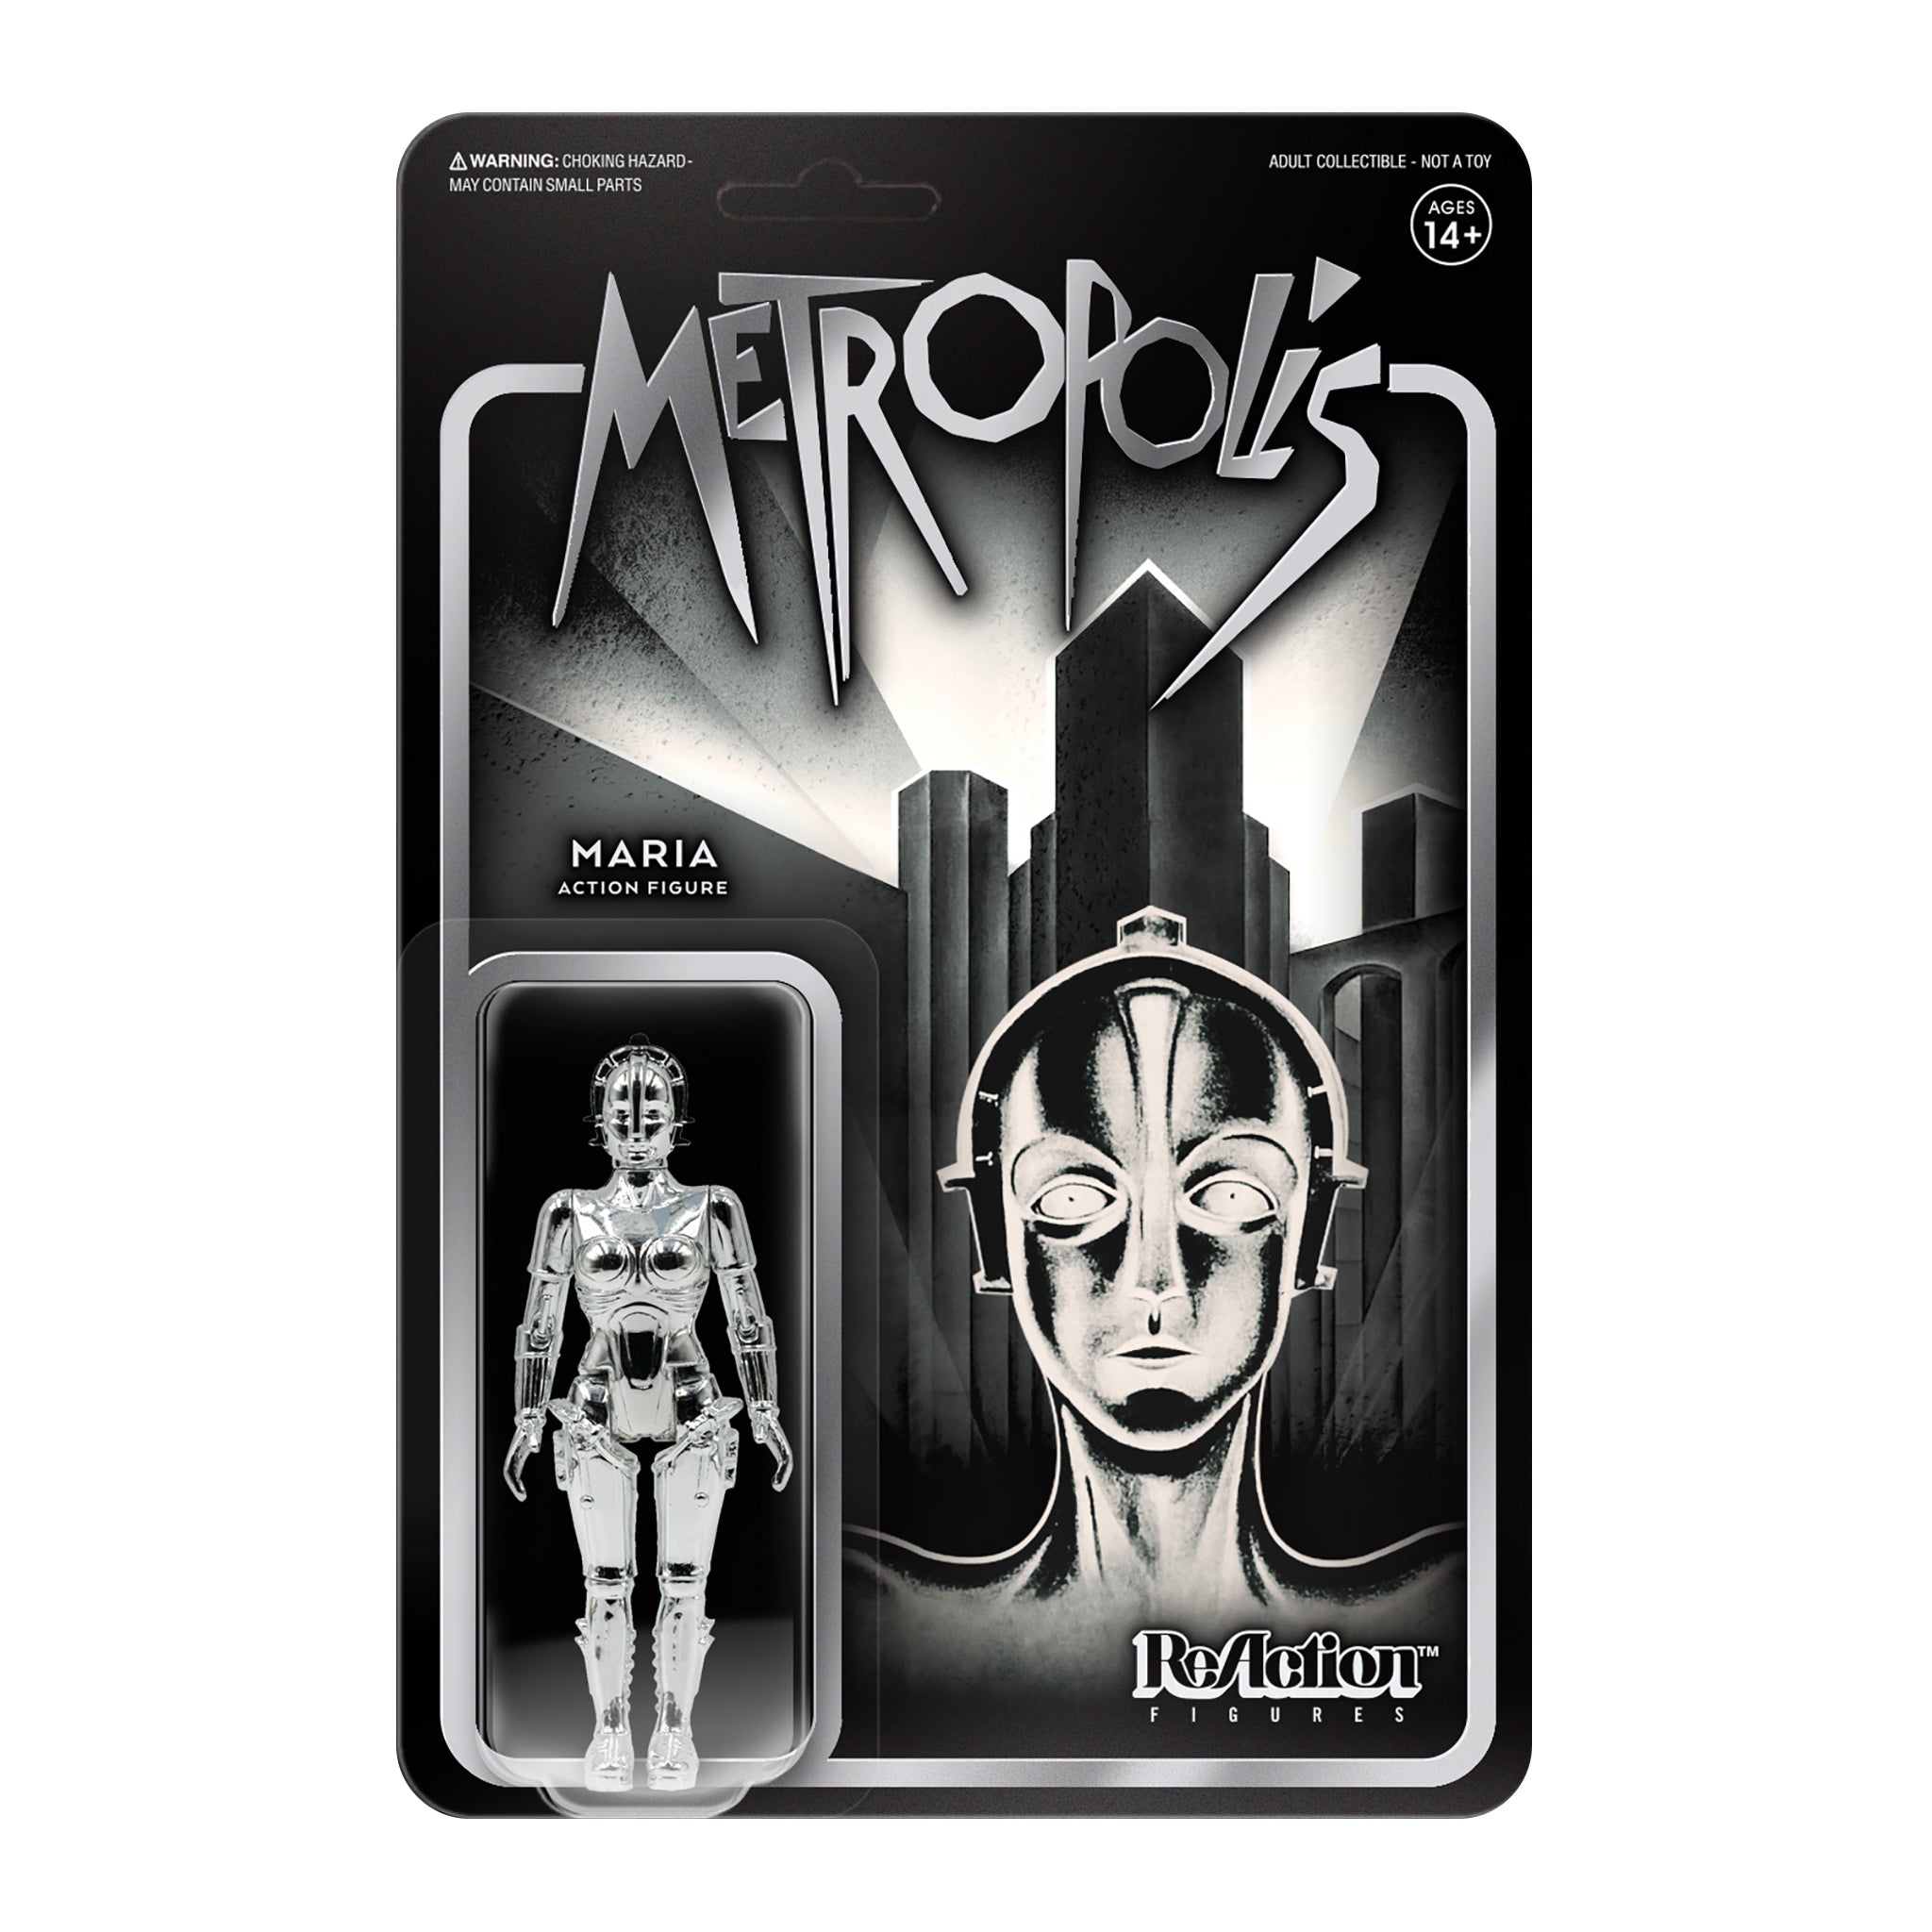 Metropolis ReAction Figure - Maria (Vac Metal Silver)